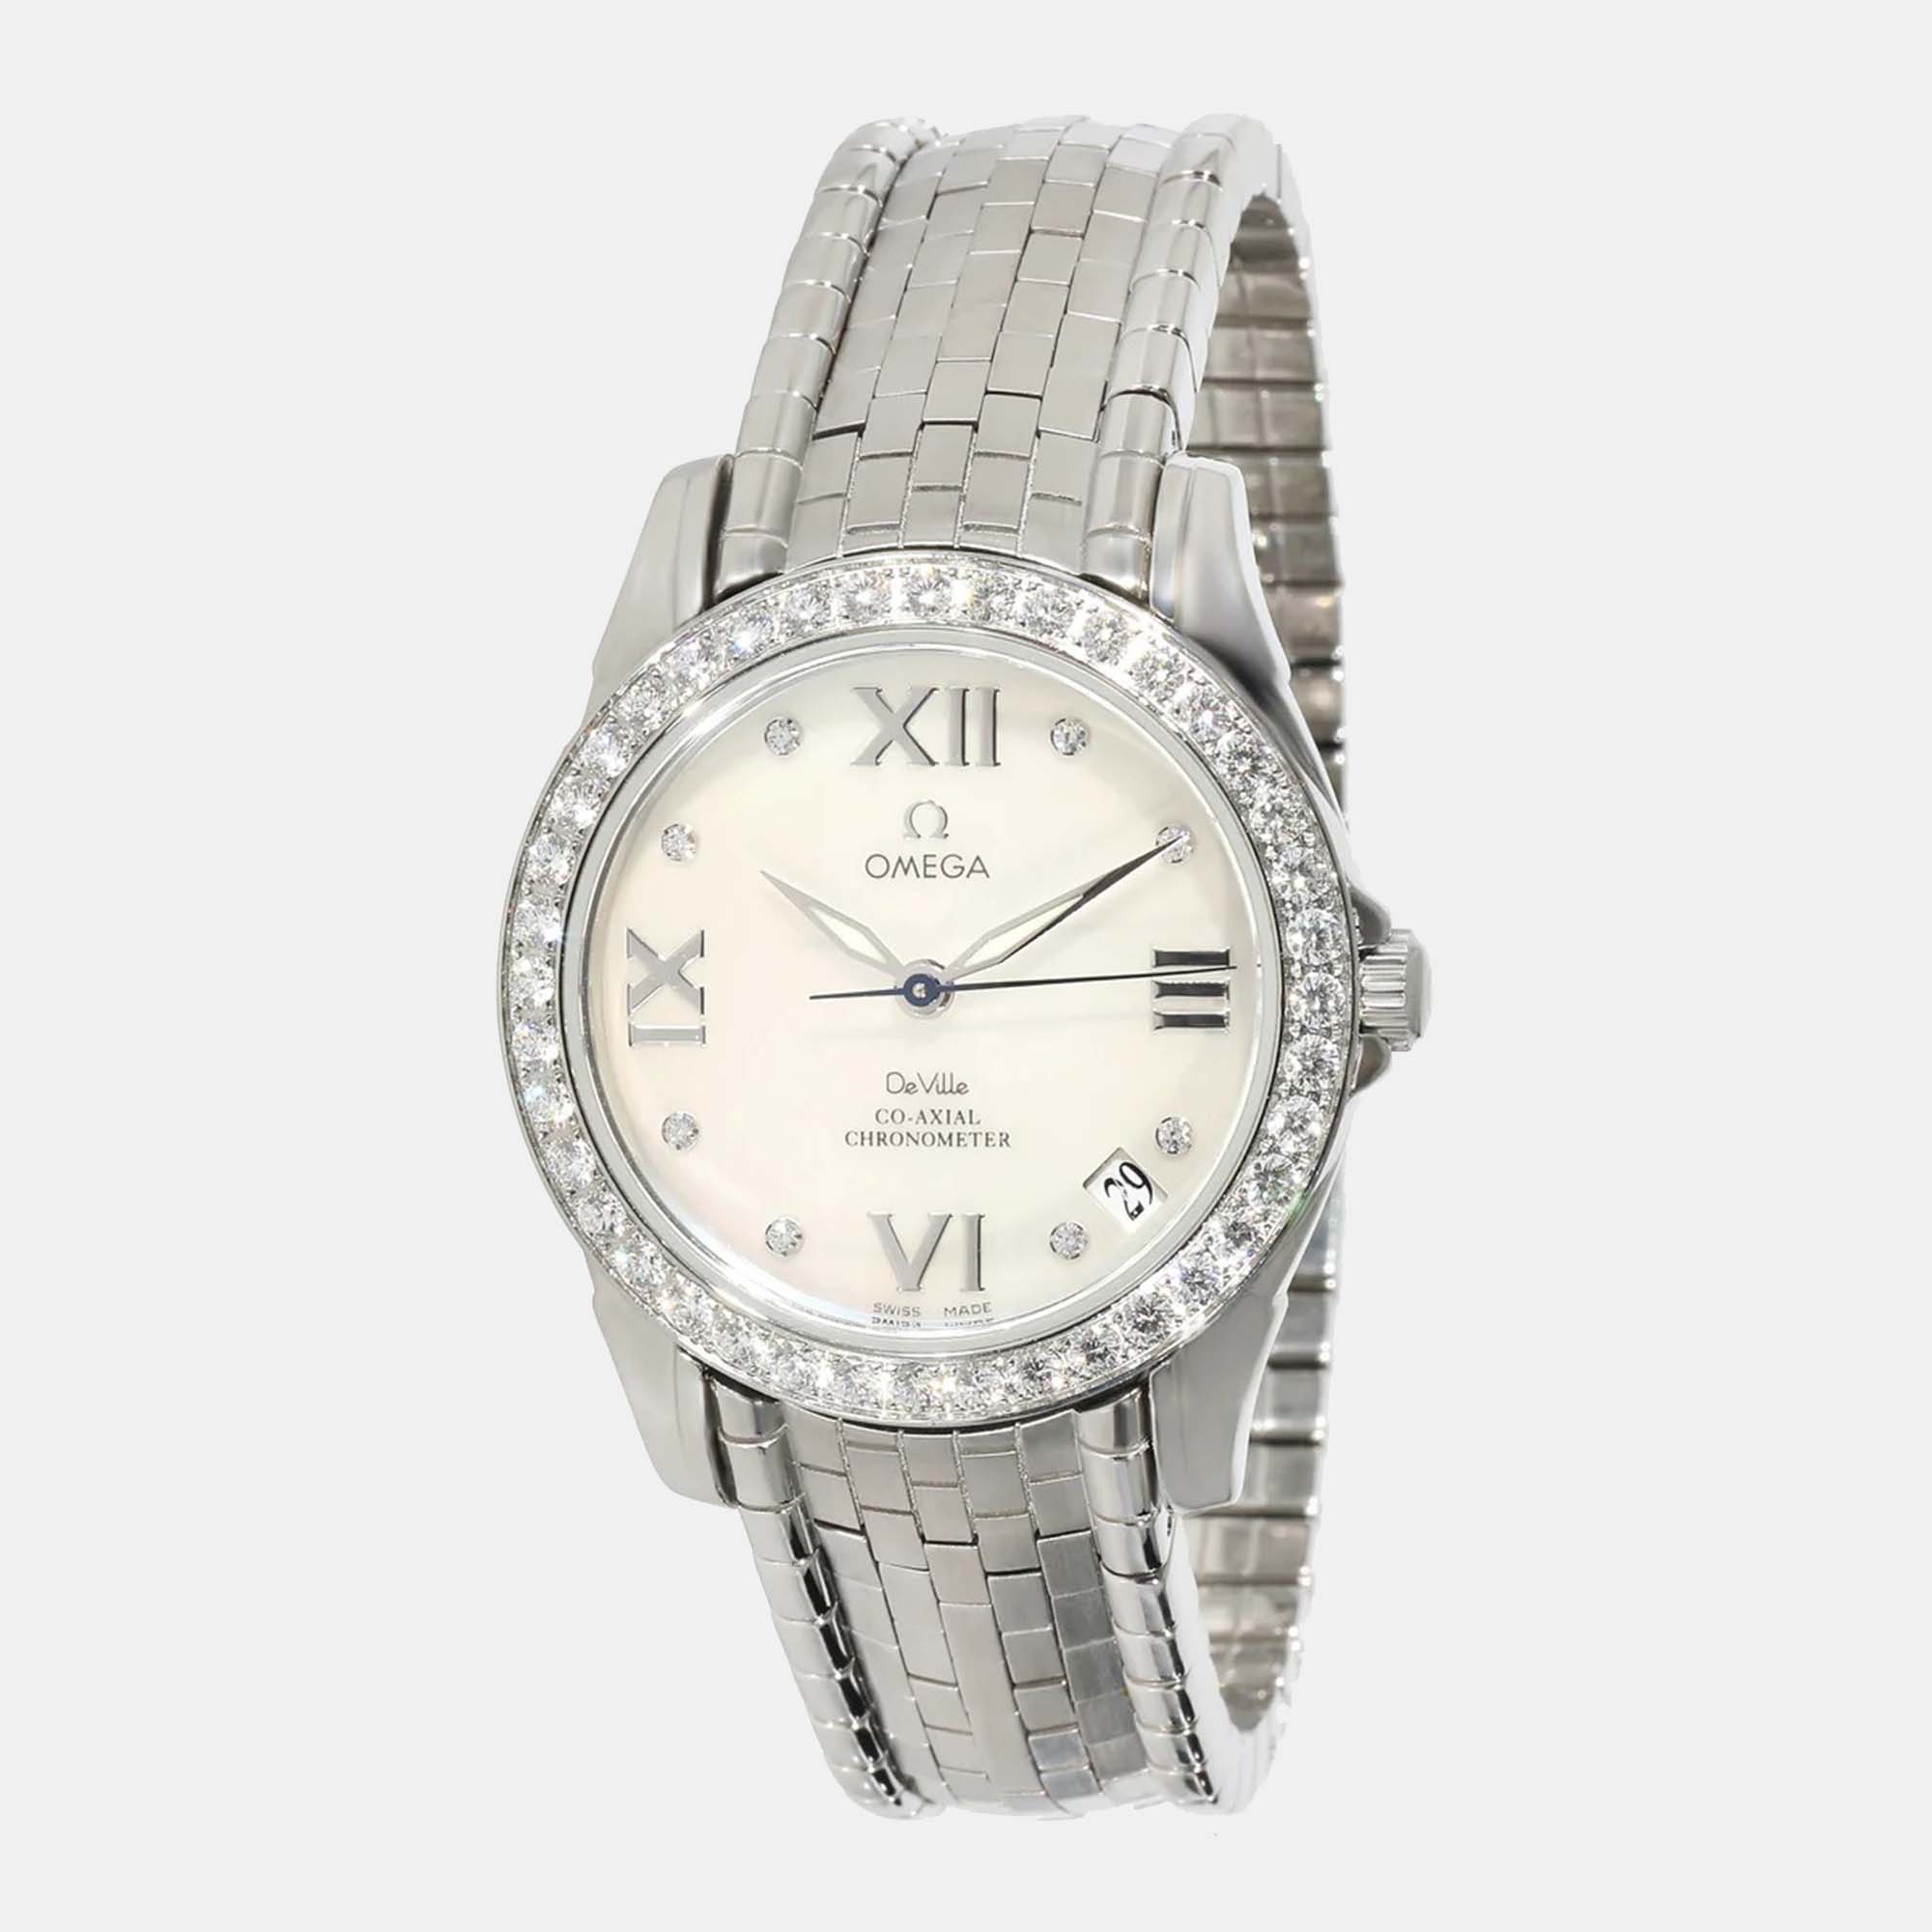 Omega white stainless steel de ville 4586.75.00 automatic women's wristwatch 32.5 mm